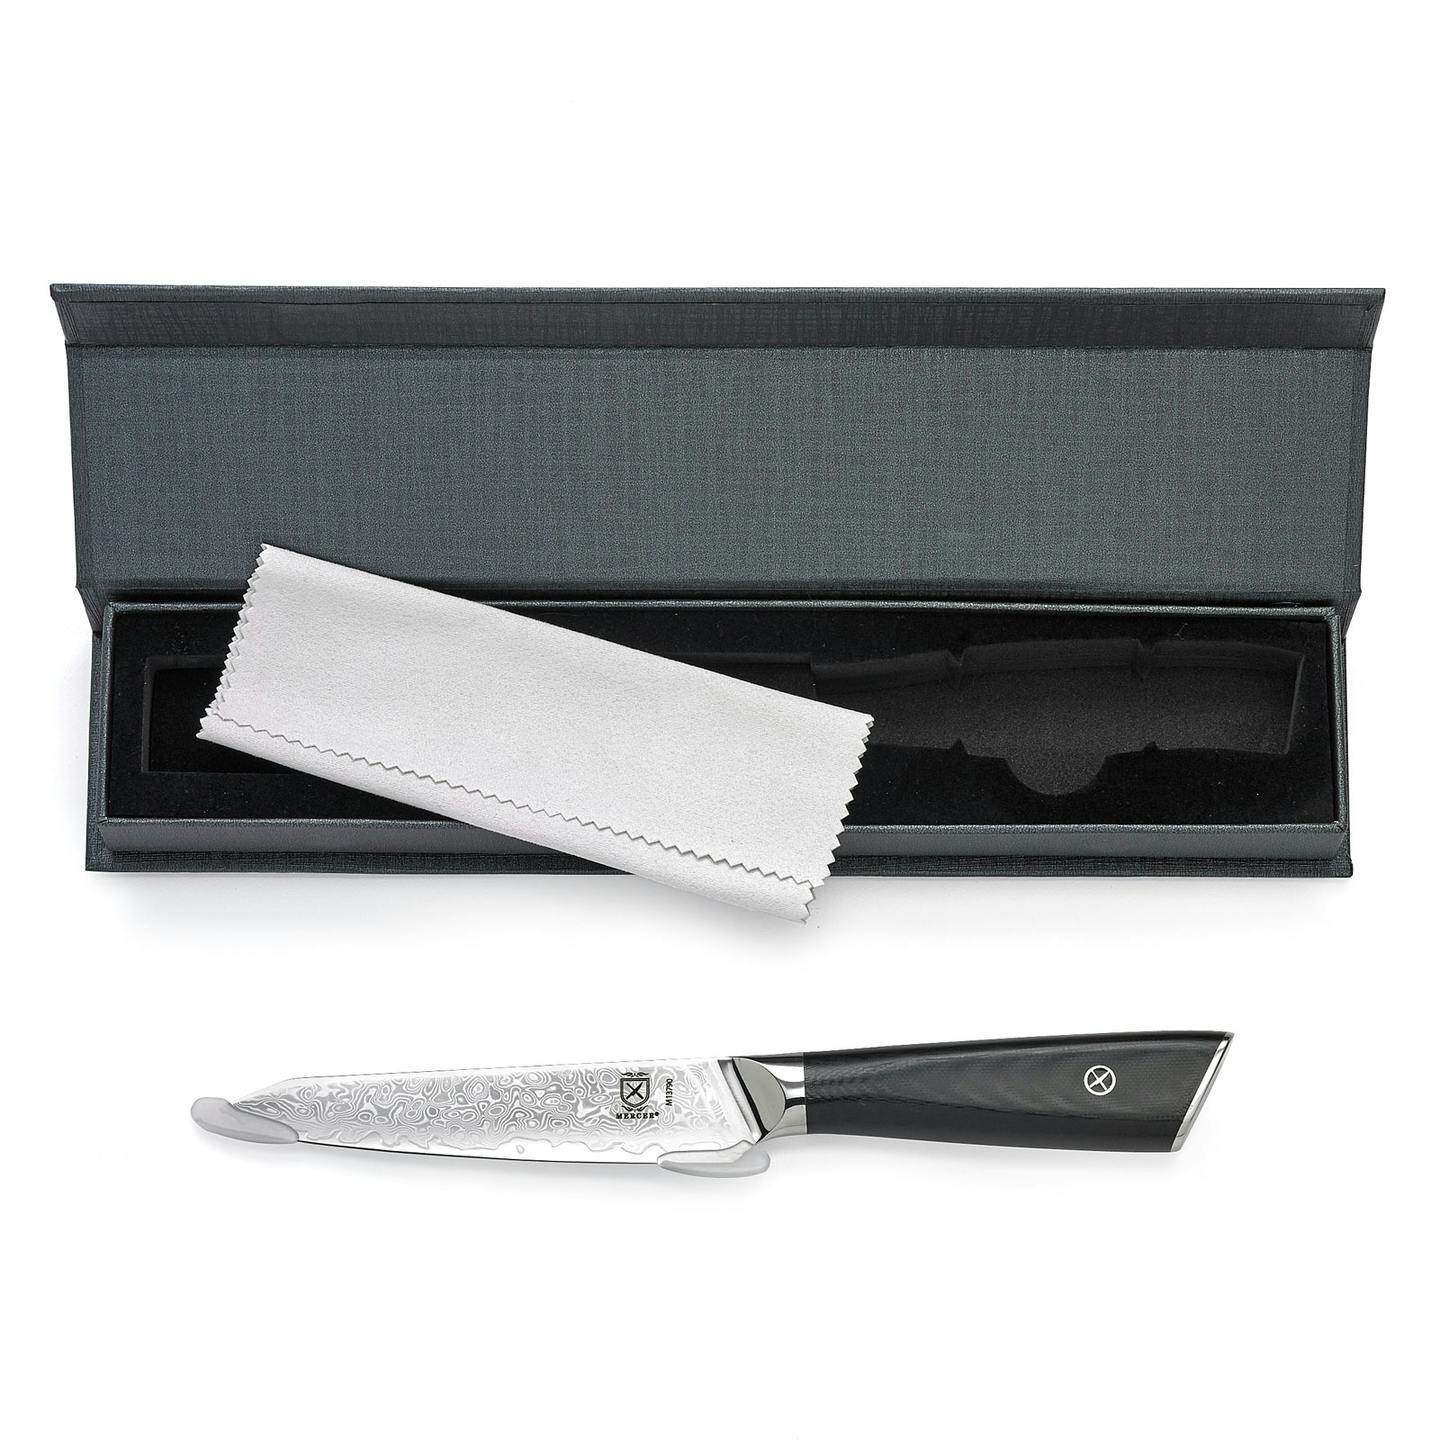 Mercer Culinary M13790 Damascus 5" Utility Knife, G10 Handle